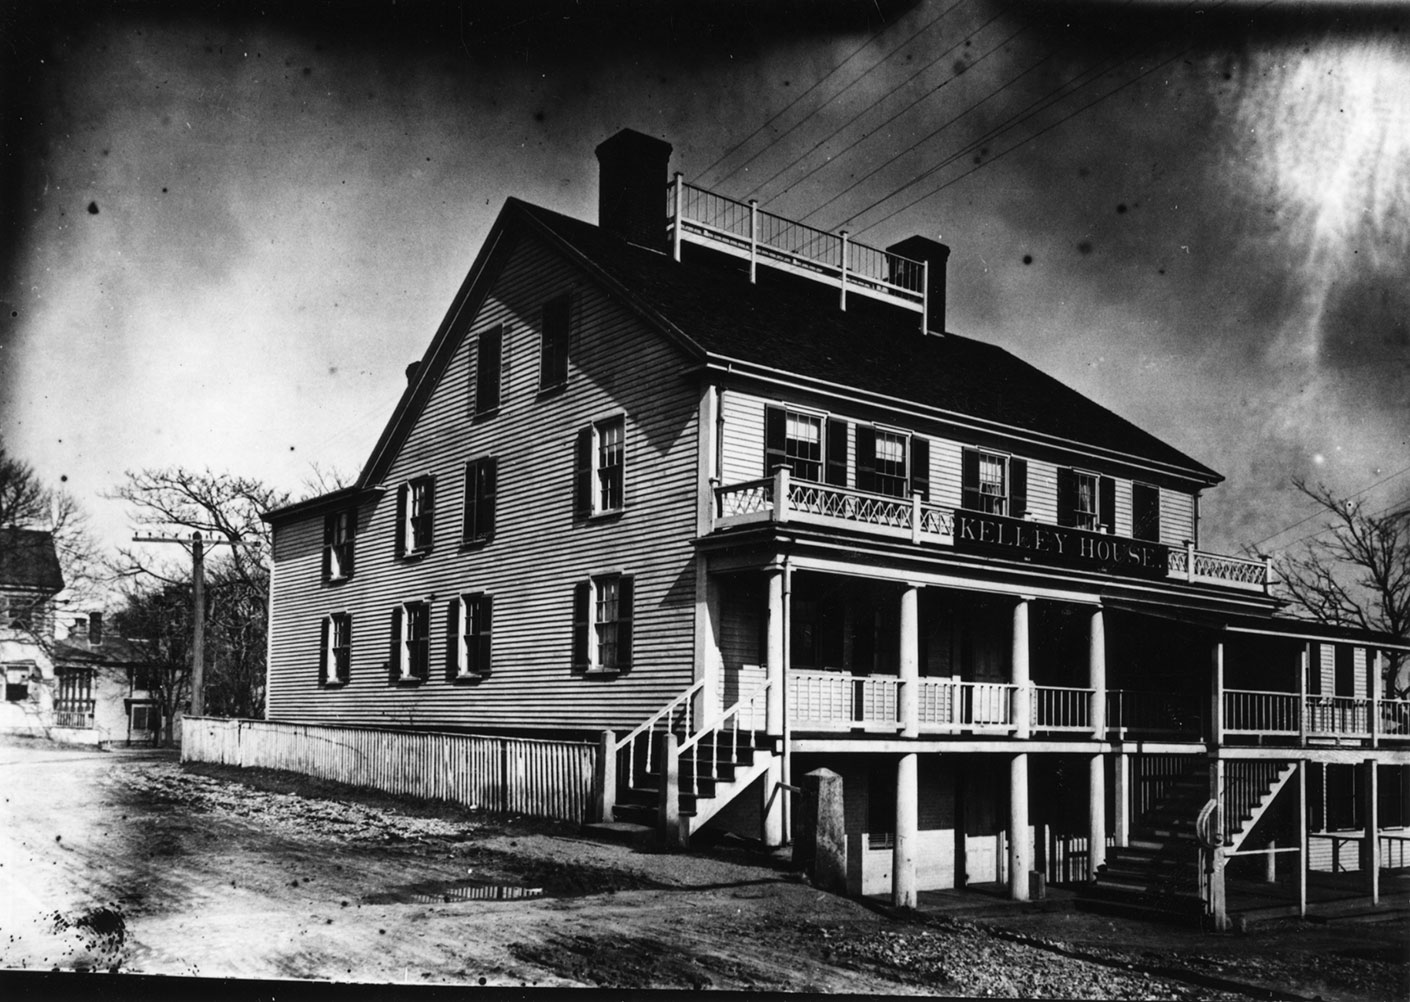 Widow's Walk on the Kelley House circa 1940